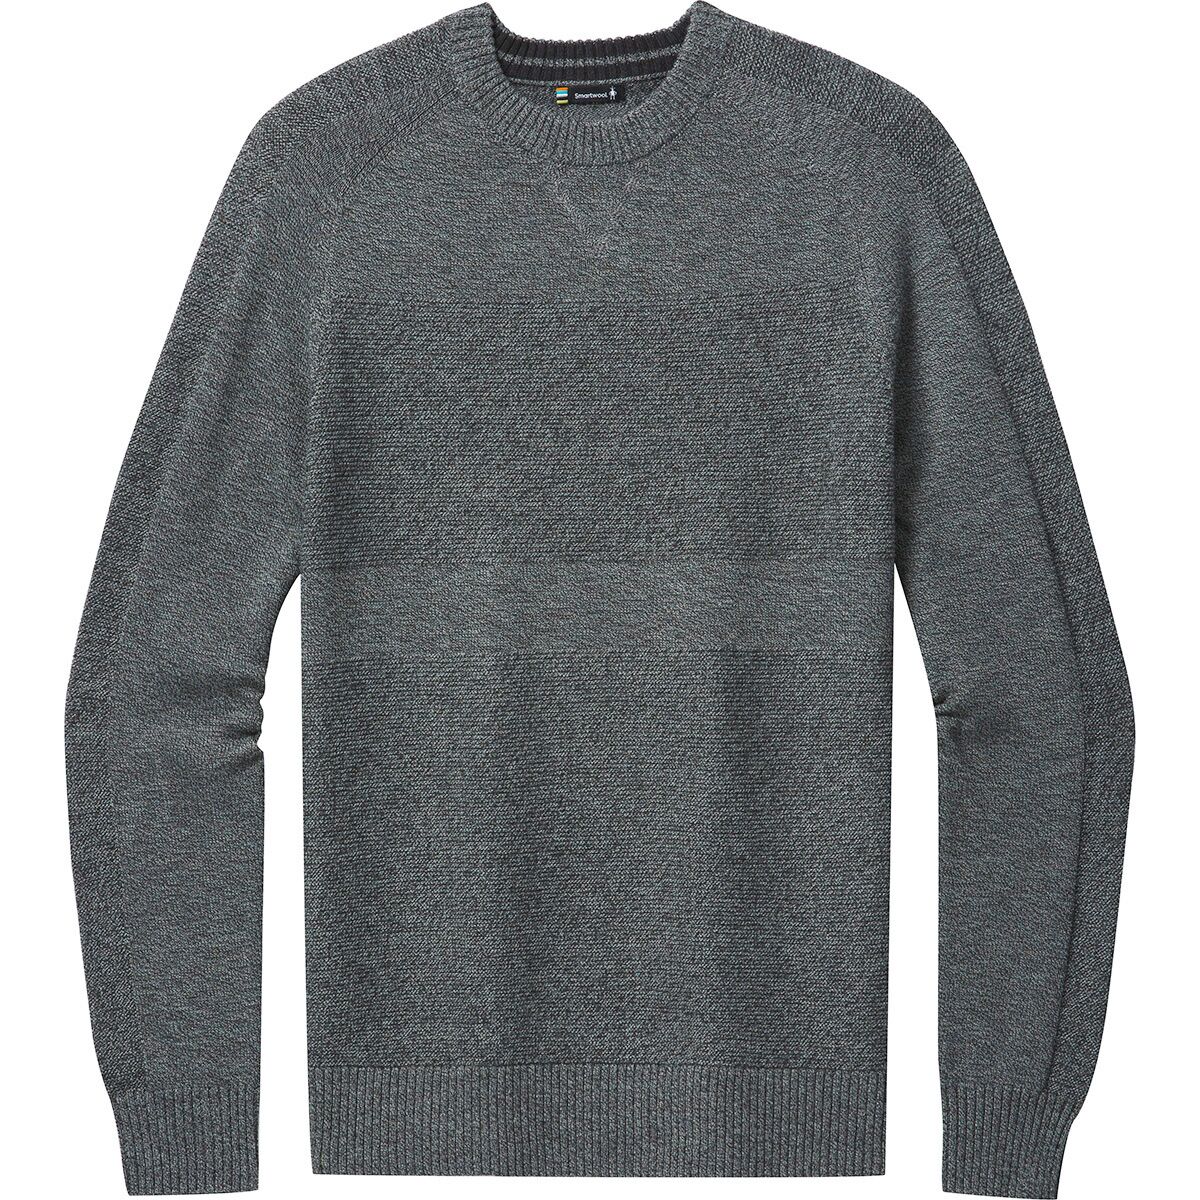 Smartwool Ripple Ridge Crew Sweater - Men's - Clothing